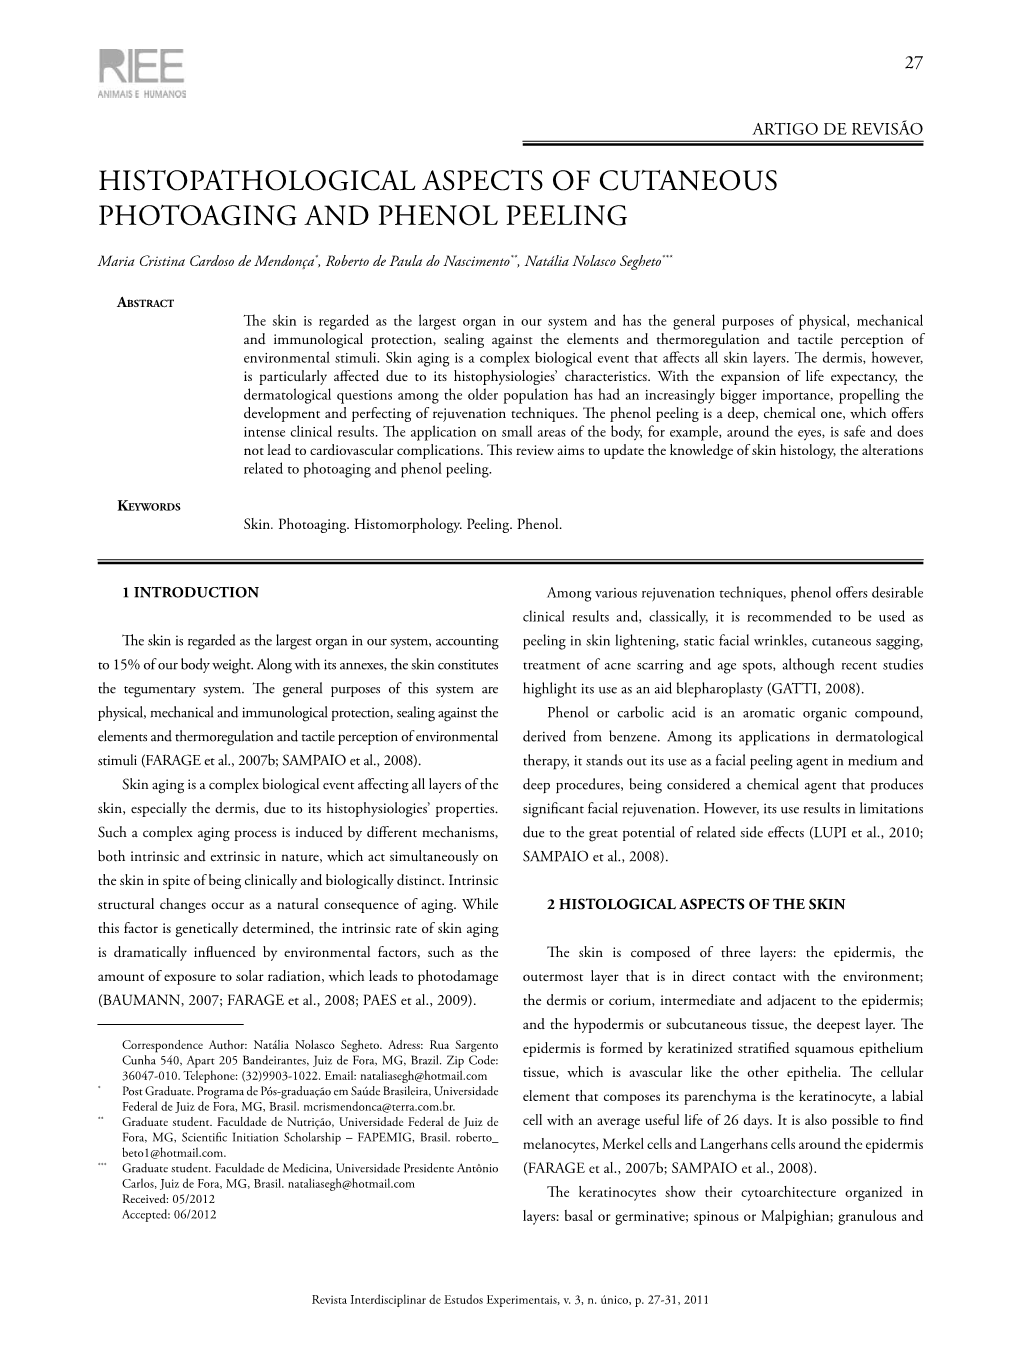 Histopathological Aspects of Cutaneous Photoaging and Phenol Peeling